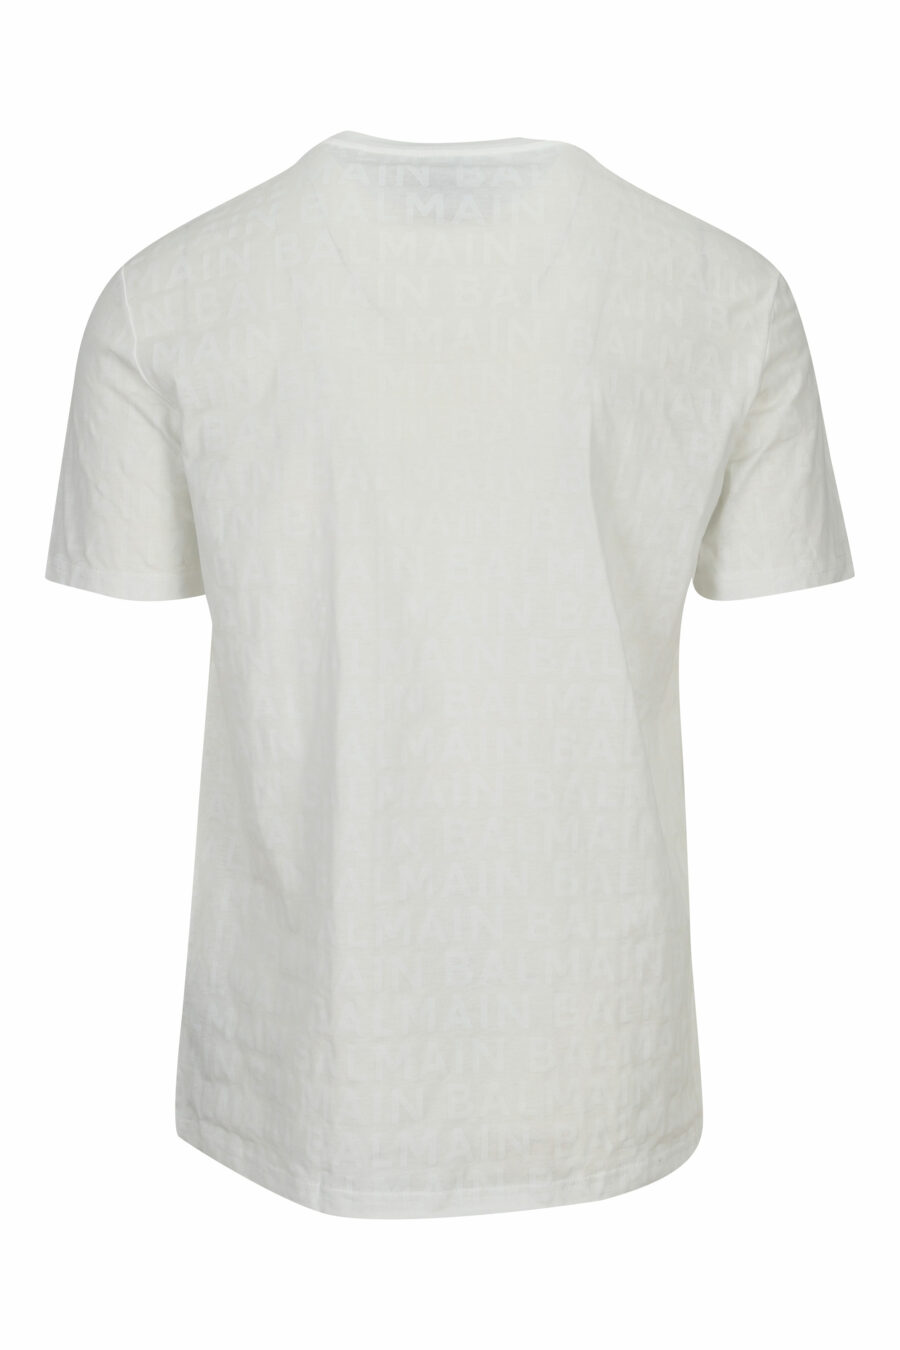 T-shirt blanc avec monogramme monochrome - 8032674525390 1